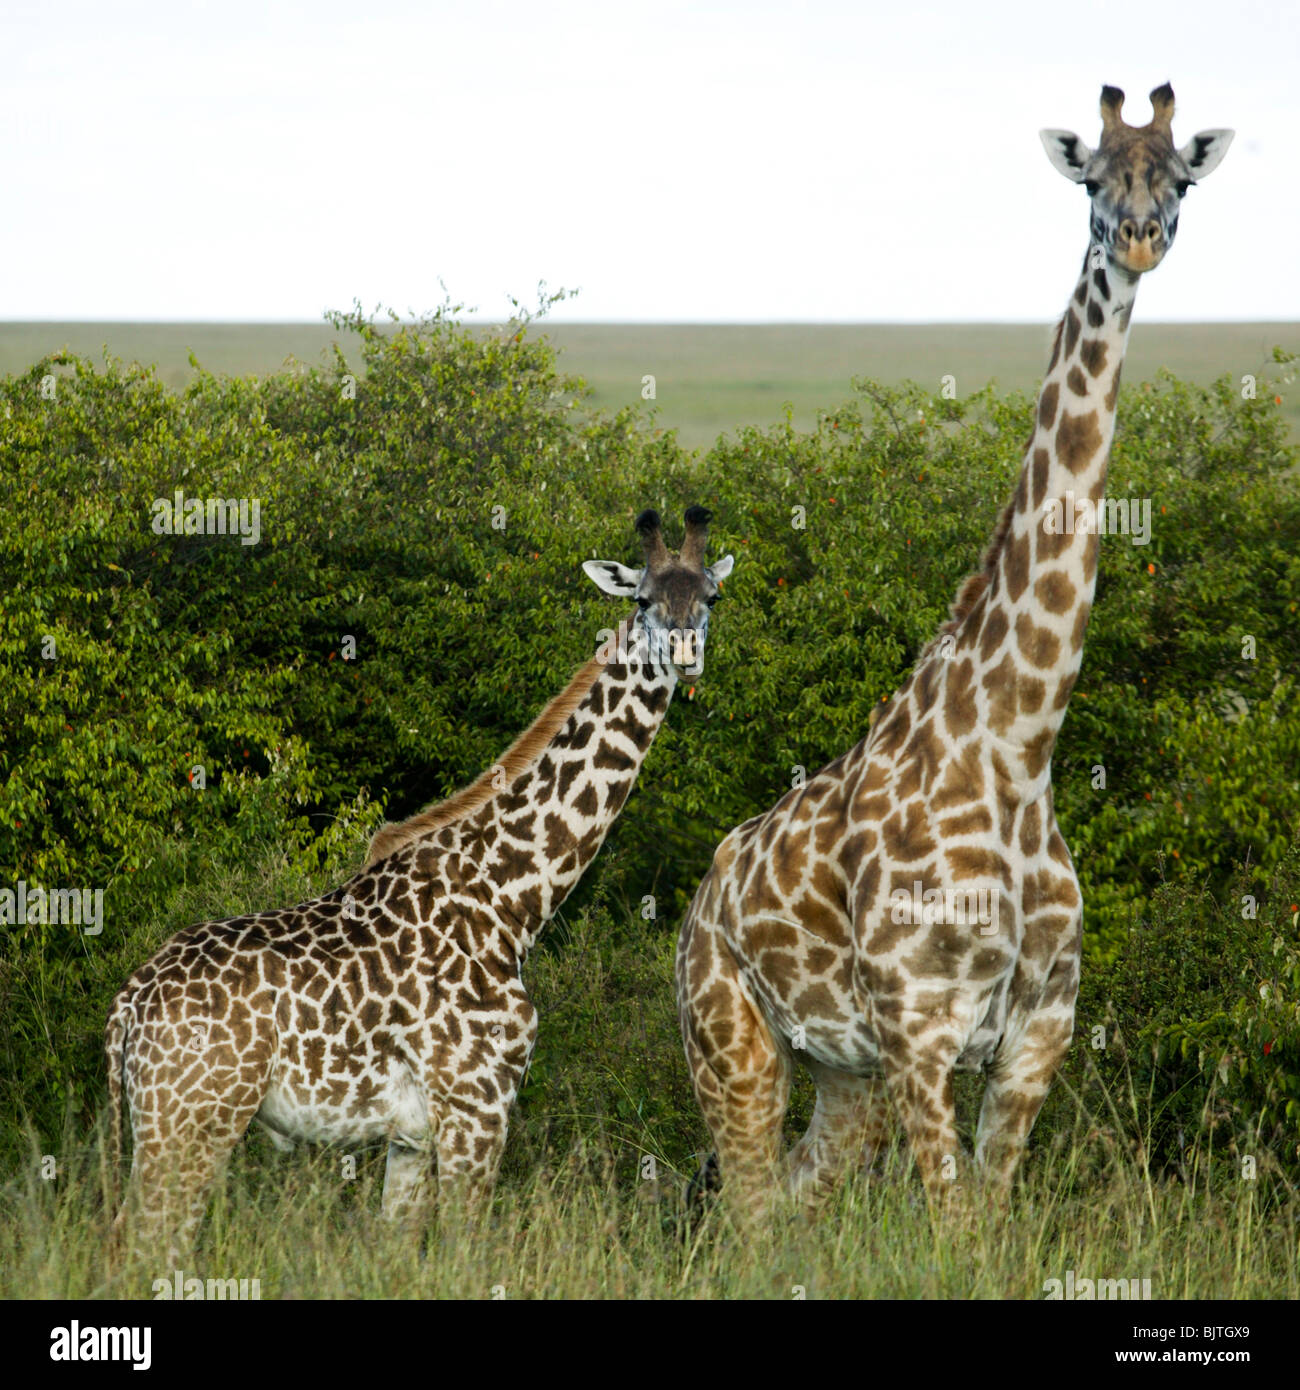 Giraffes in Kenya, Africa Stock Photo